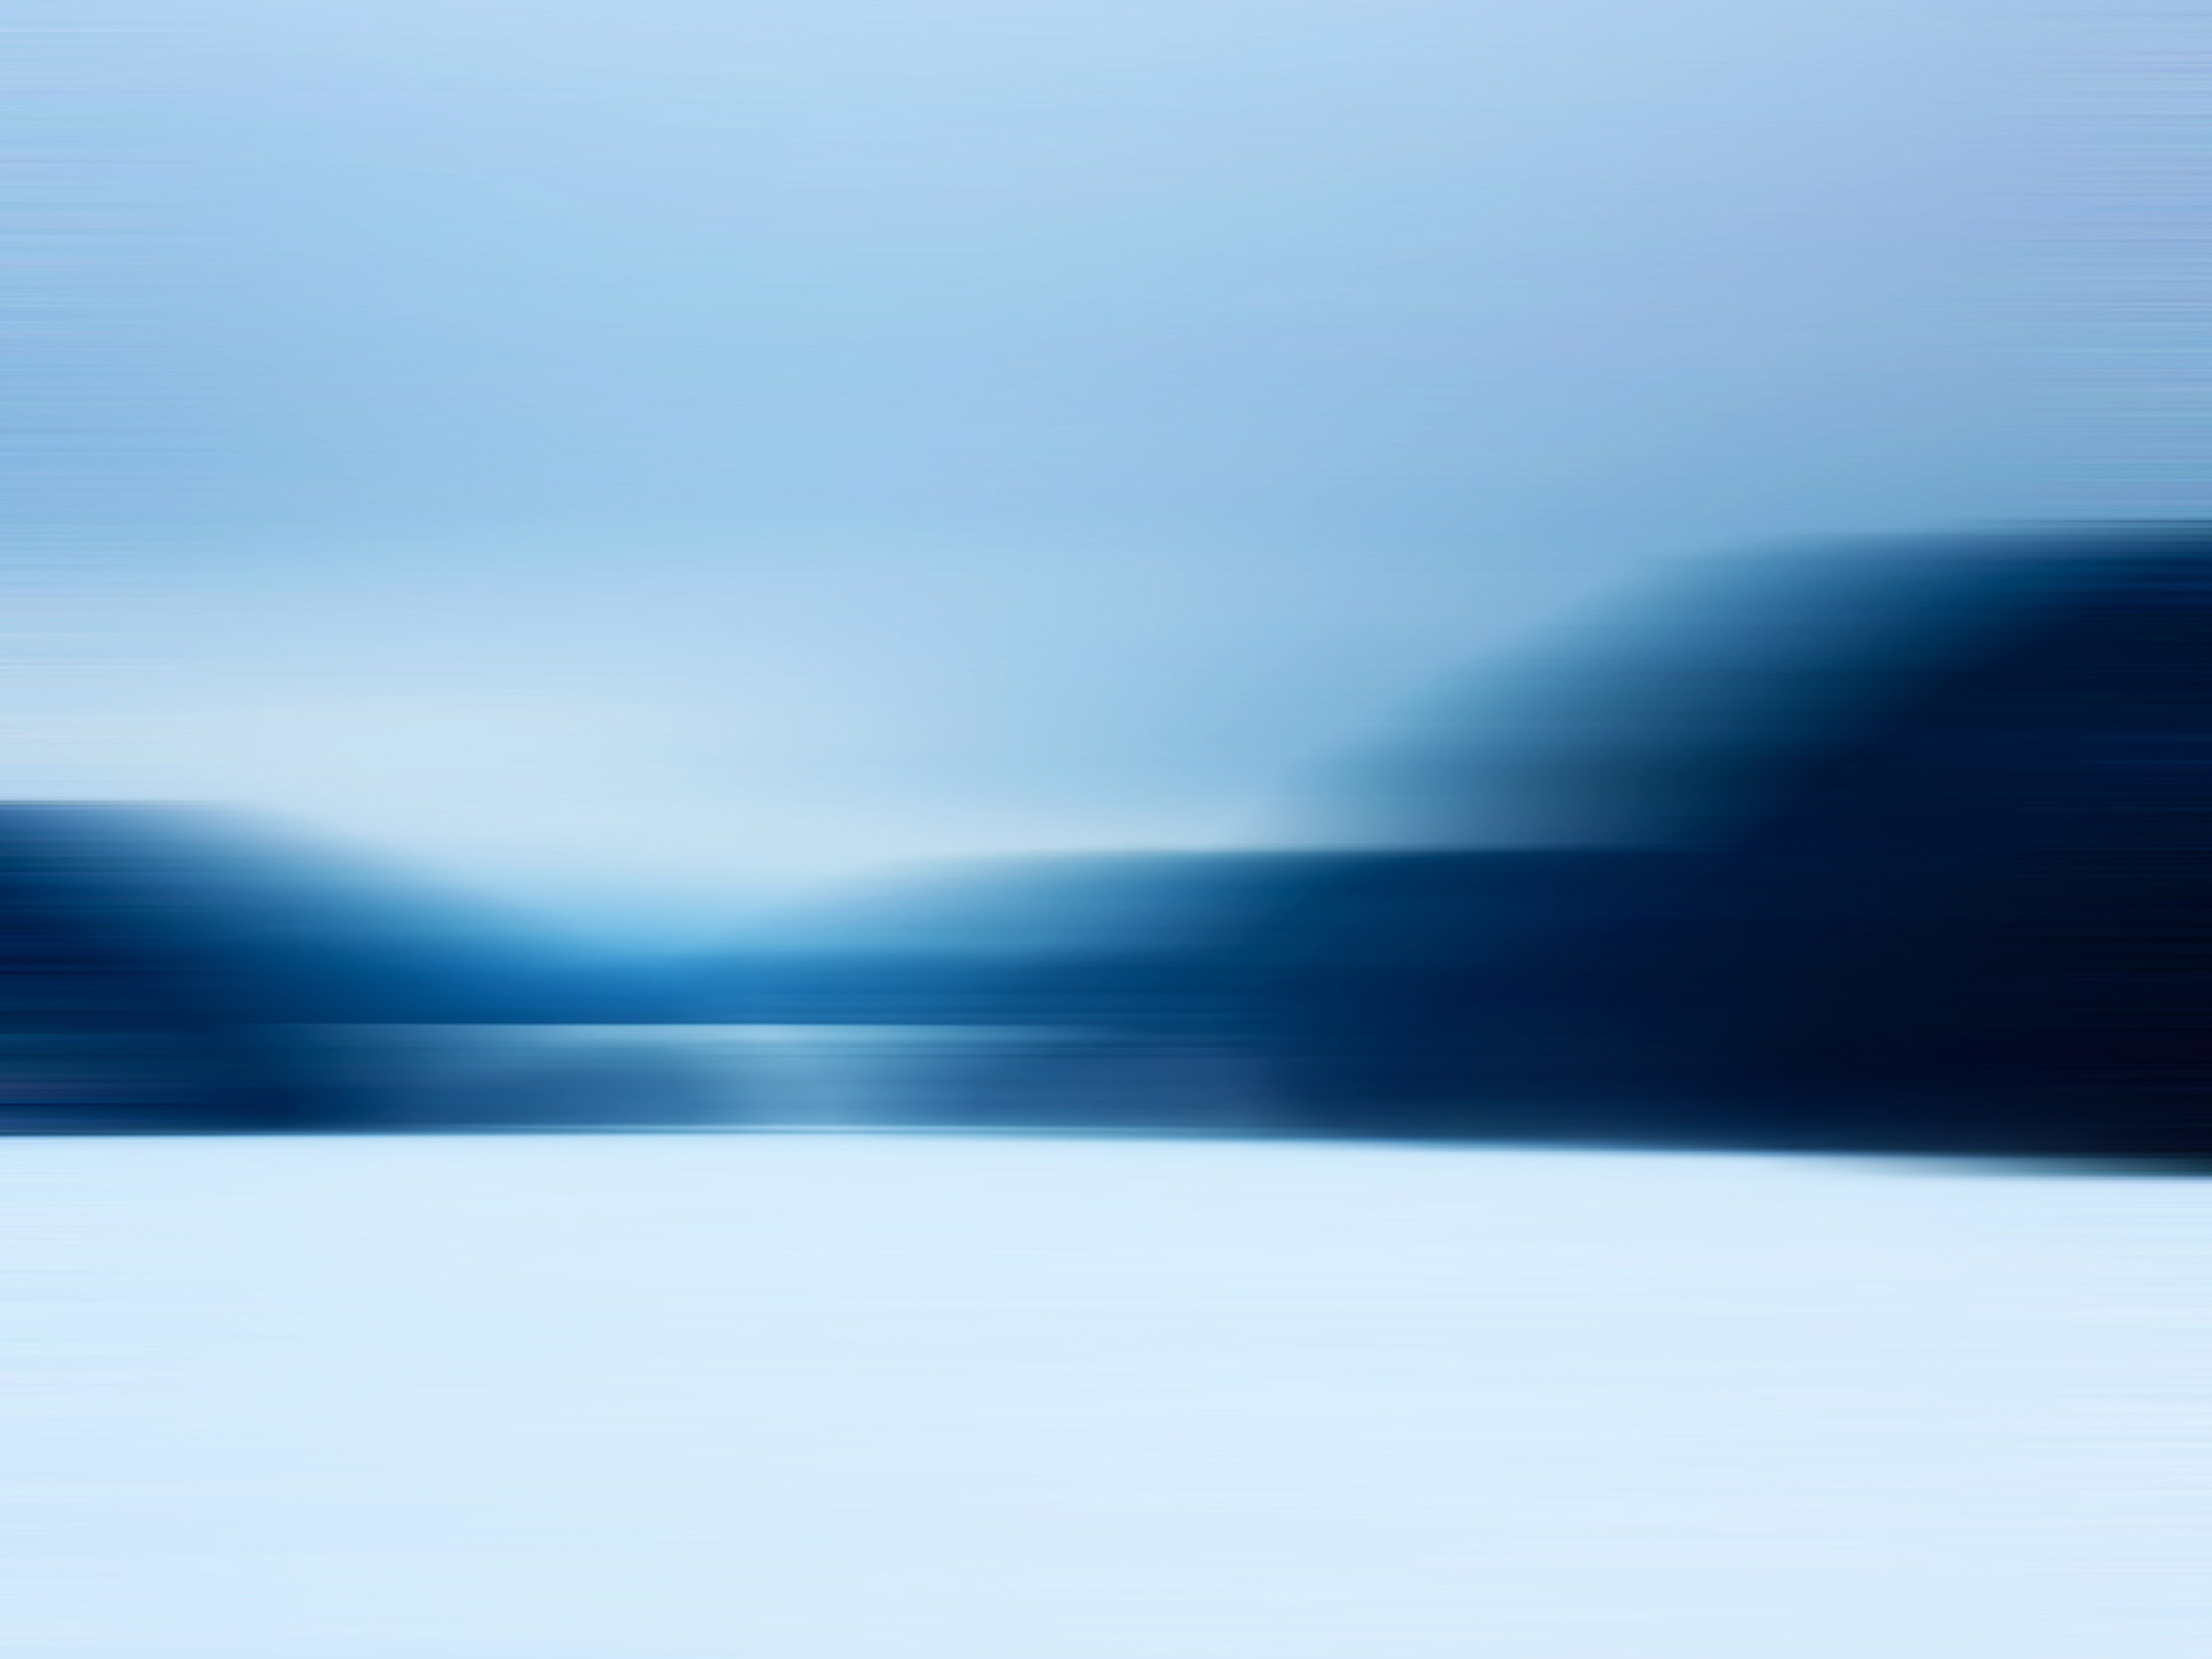   Snow on Reservoir  2015 Digital Image 